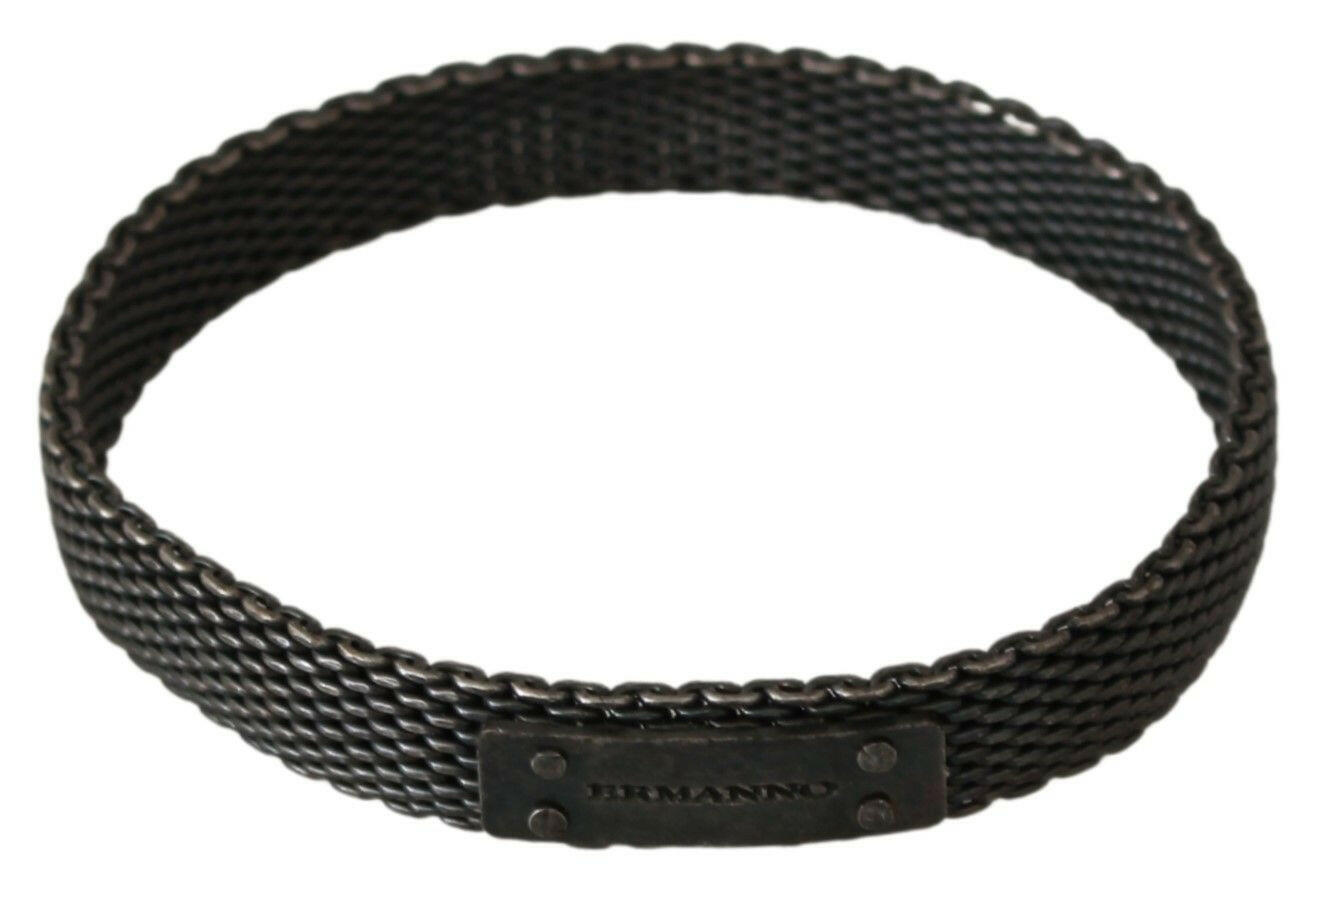 Ermanno Scervino Silver Branded Metal Steel Unisex Bracelet - GENUINE AUTHENTIC BRAND LLC  